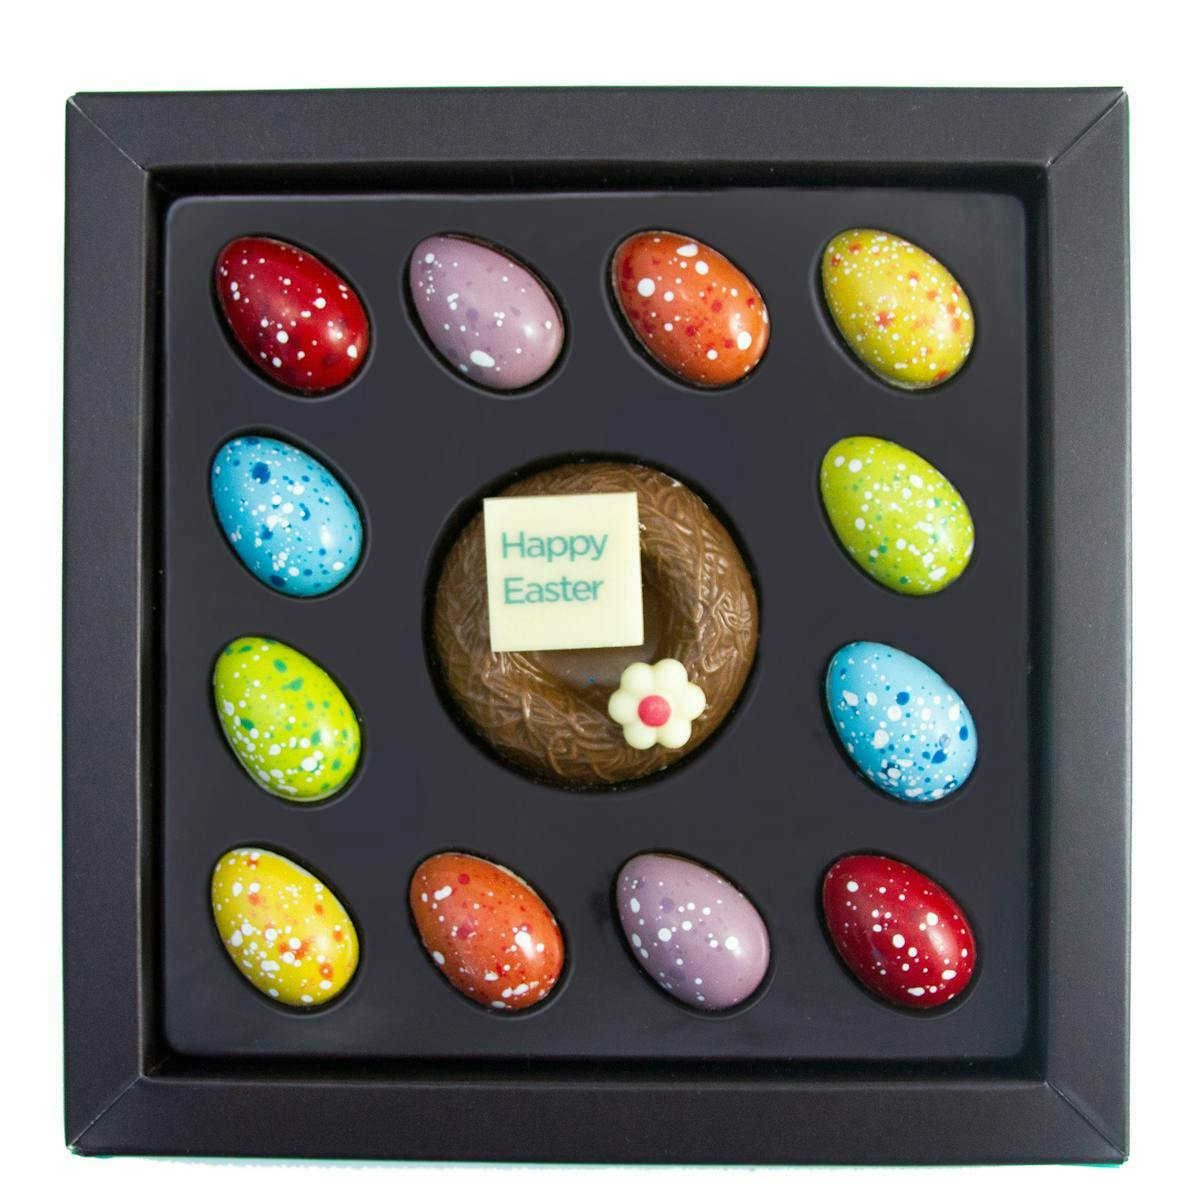 Colourful chocolate eggs in a square black box.